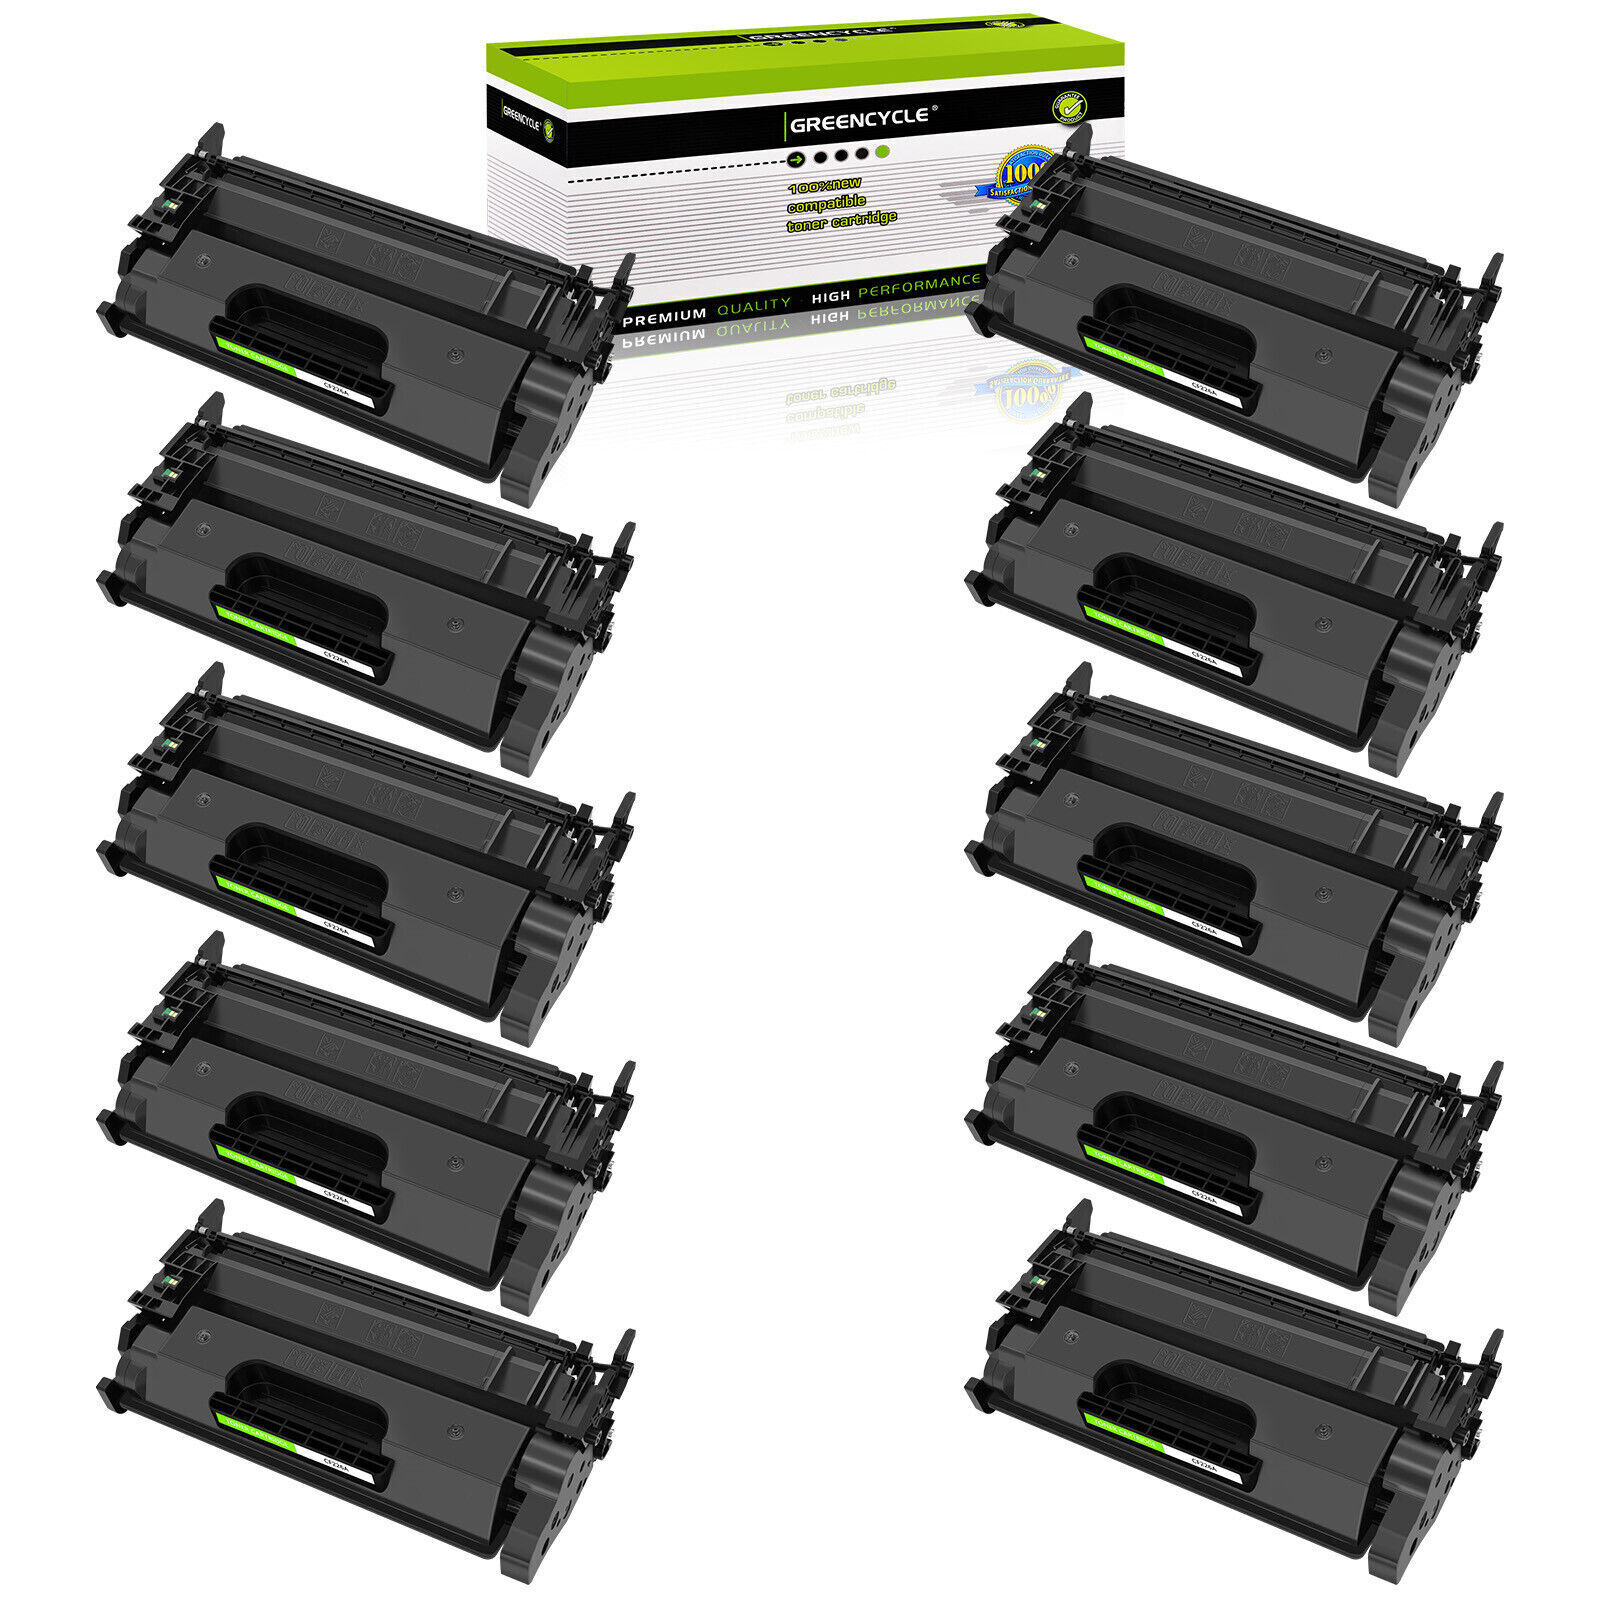 10PK greencycle High Yield CF226A 26A Toner Cartridge For HP M402n MFP M426fdw